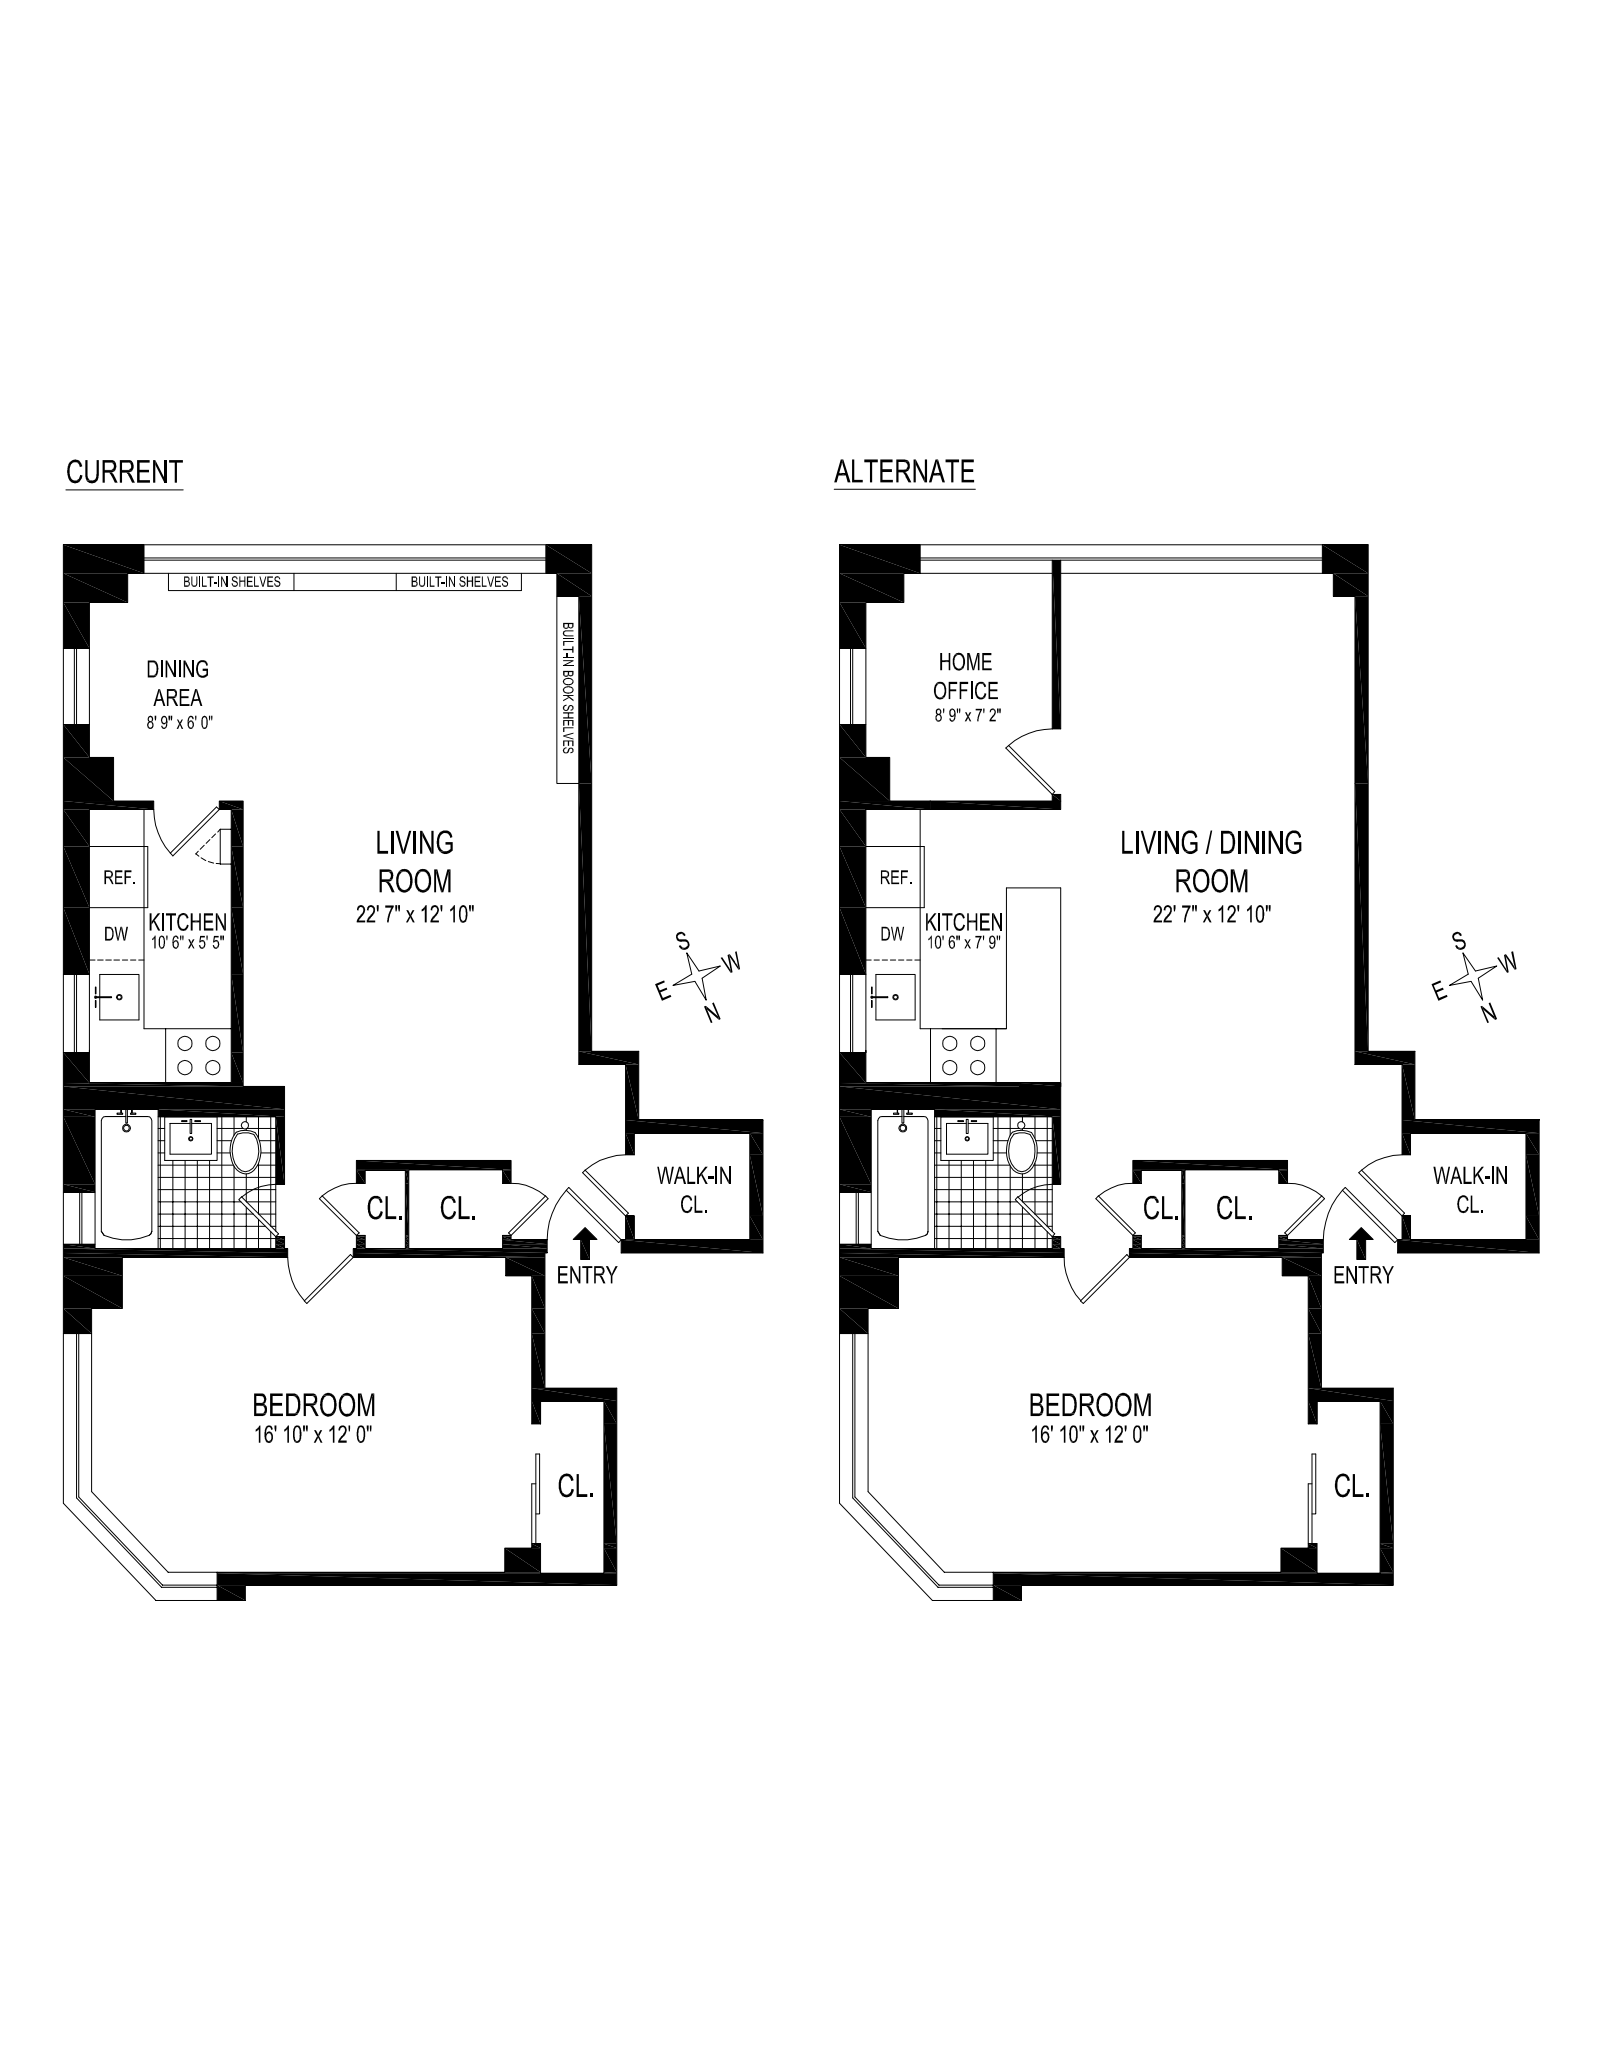 Floorplan for 175 West 13th Street, 5B